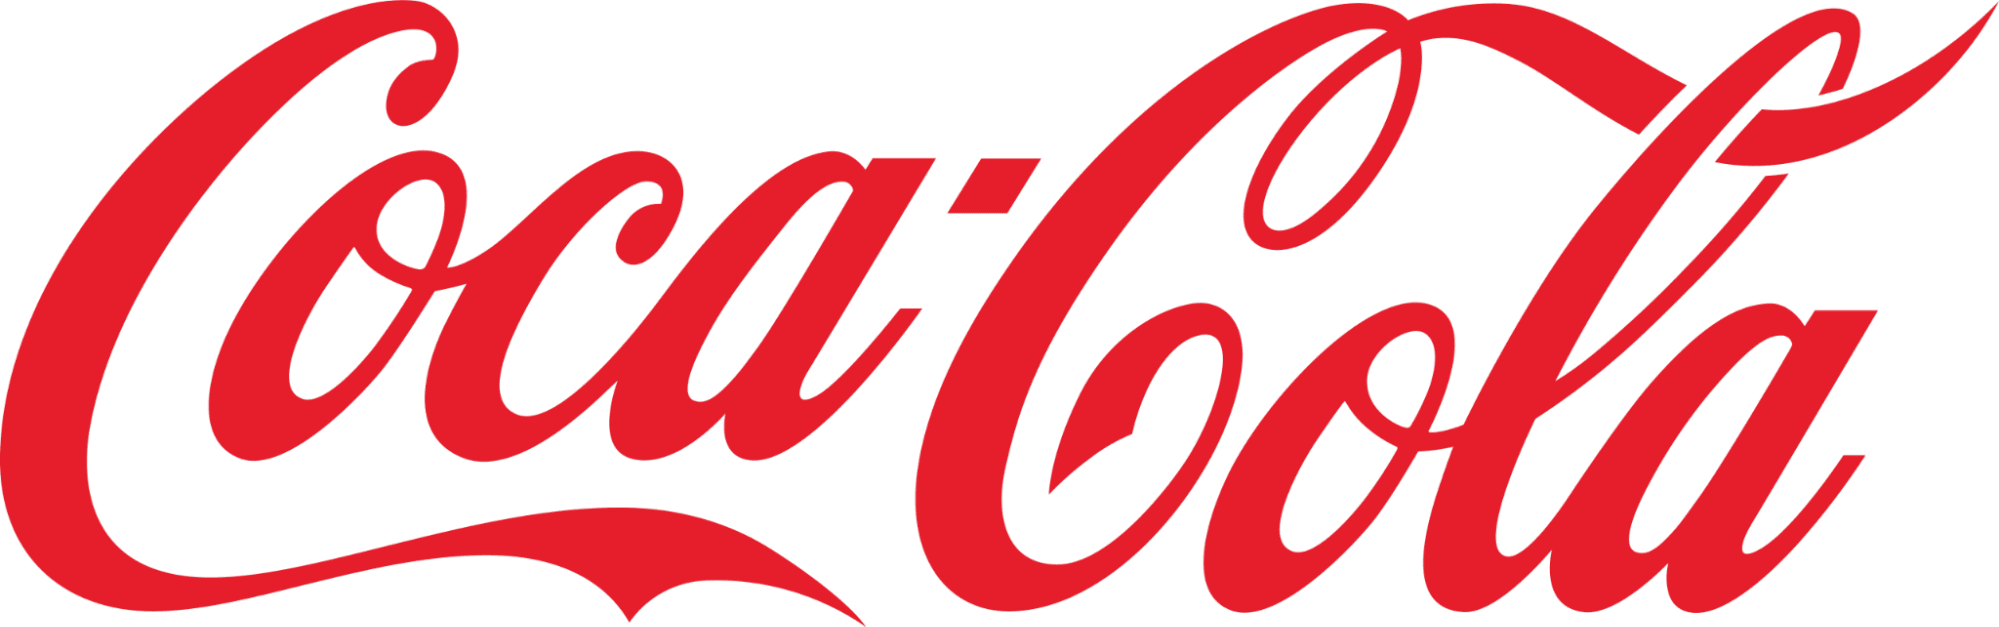 Coca cola code of conduct